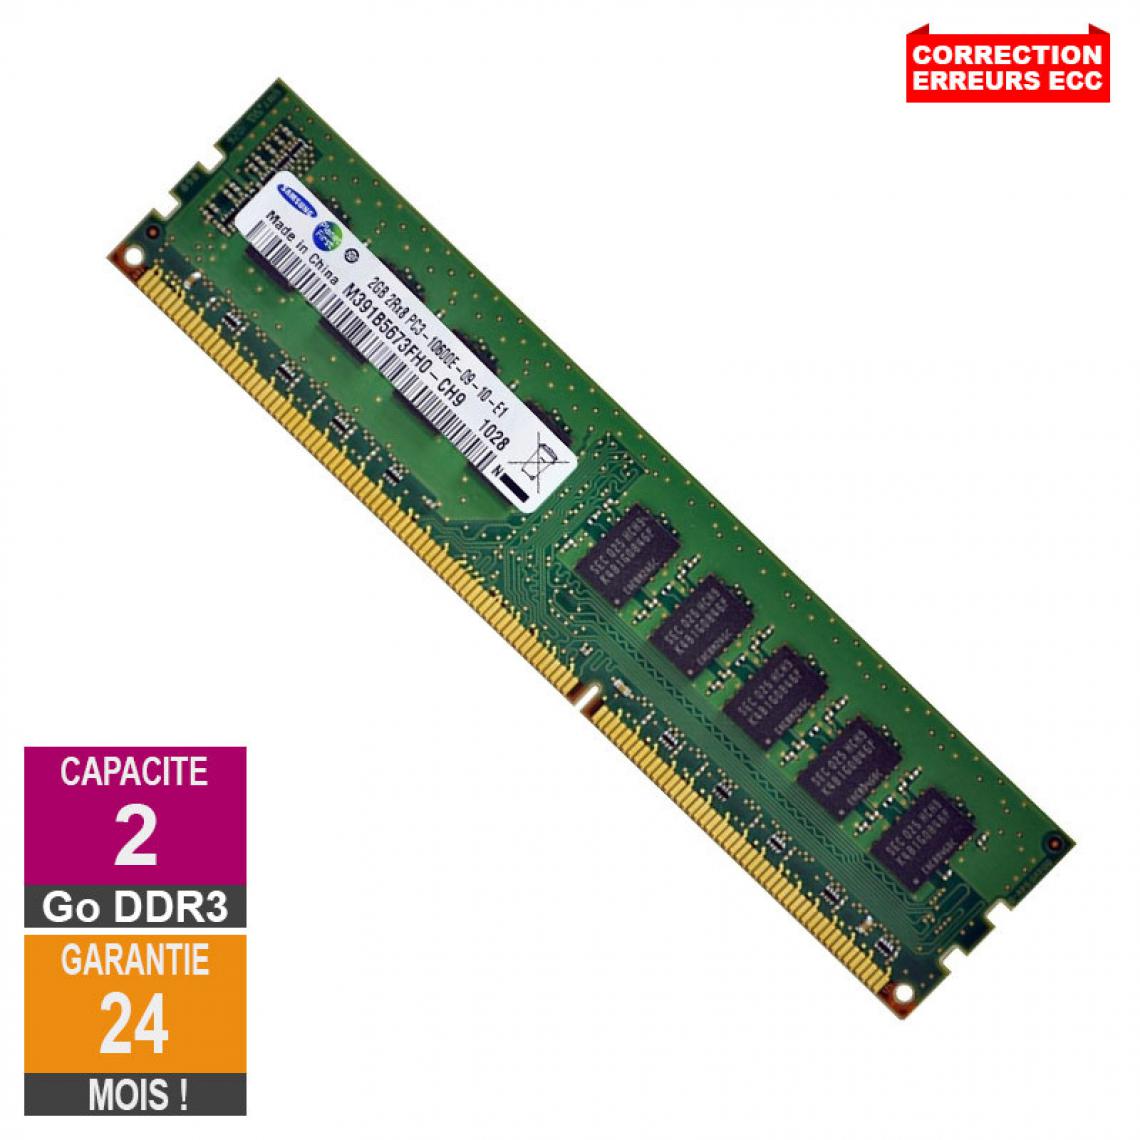 Samsung - Barrette Mémoire 2Go RAM DDR3 Samsung M391B5673FH0-CH9 DIMM PC3-10600E - RAM PC Fixe